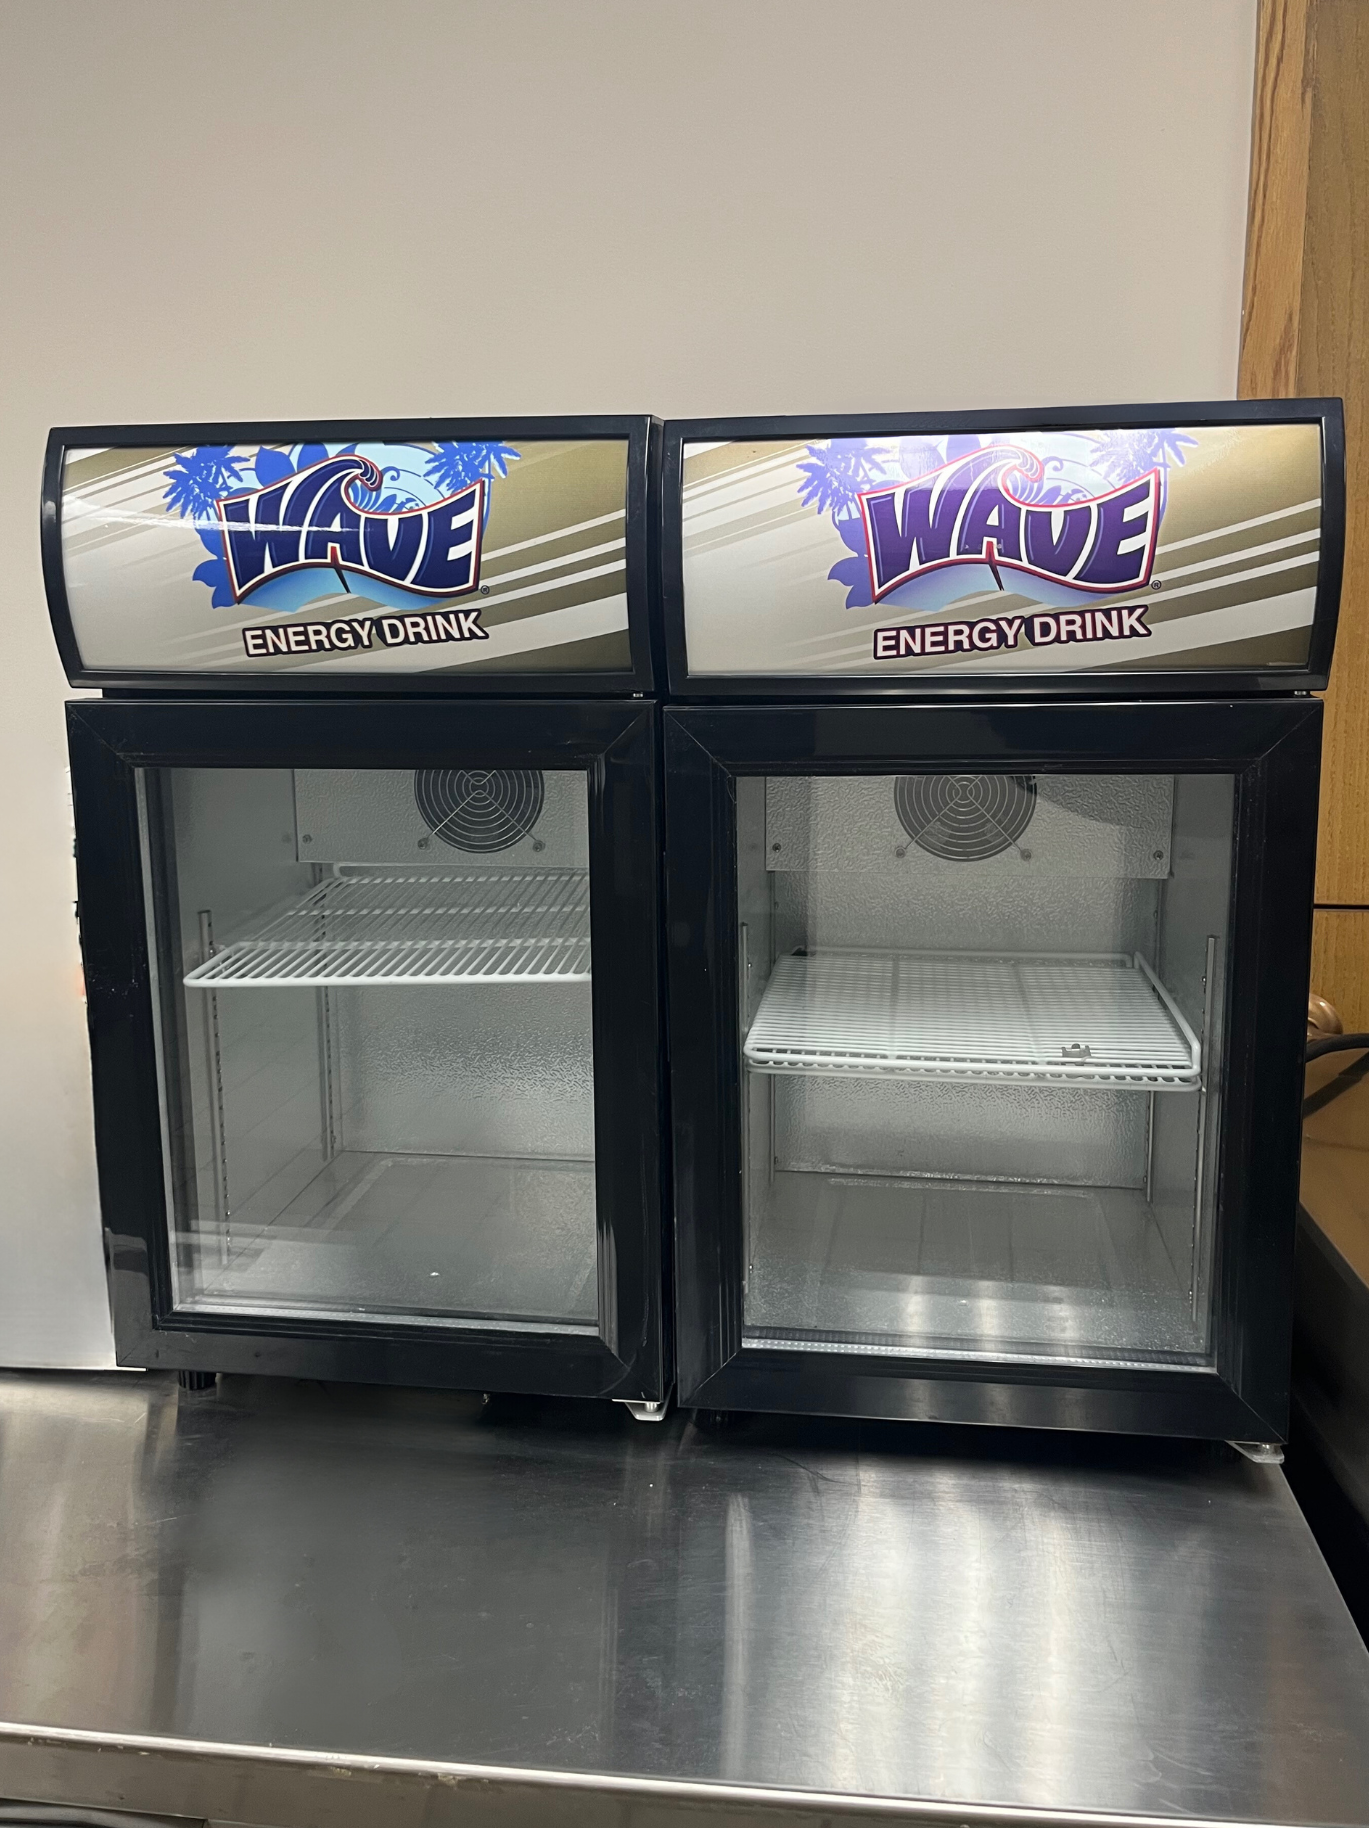 Model: N/A Winco Wave Beverage Refrigerator